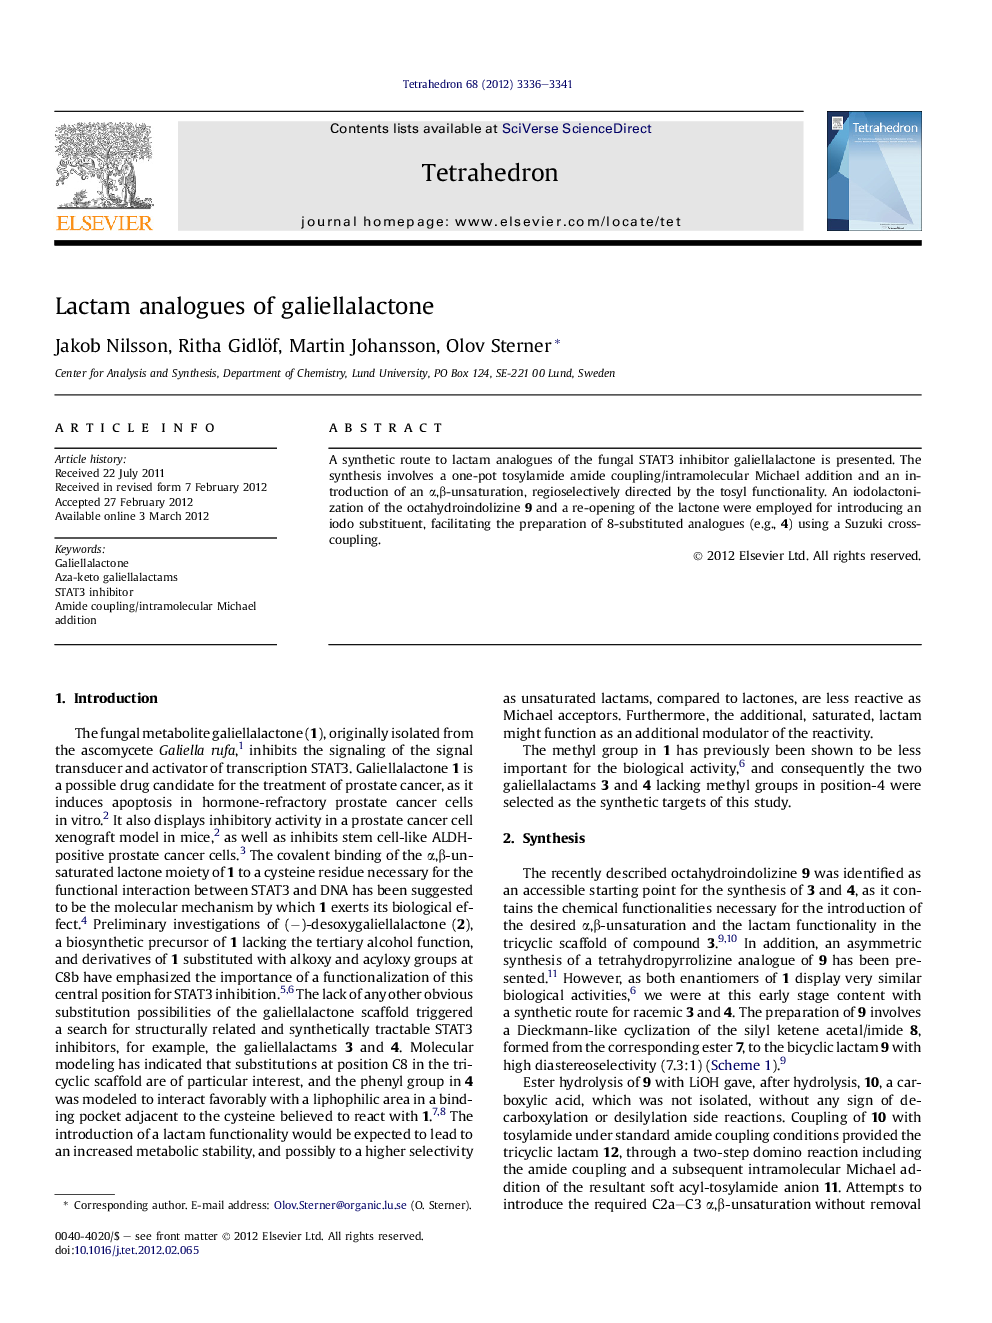 Lactam analogues of galiellalactone